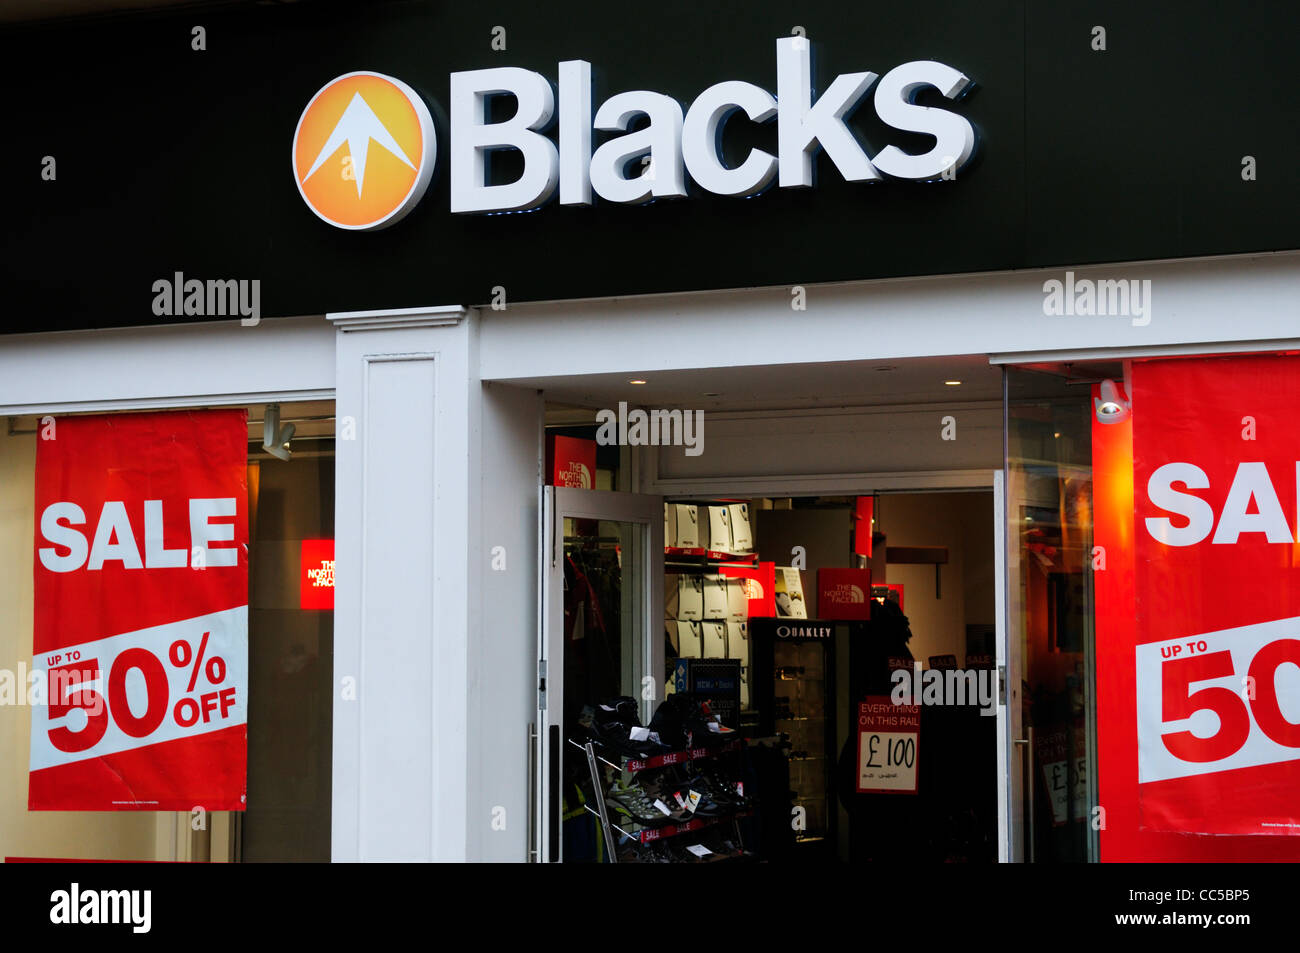 Blacks Outdoor Shop with Sale Notices, Cambridge, England, UK Stock Photo